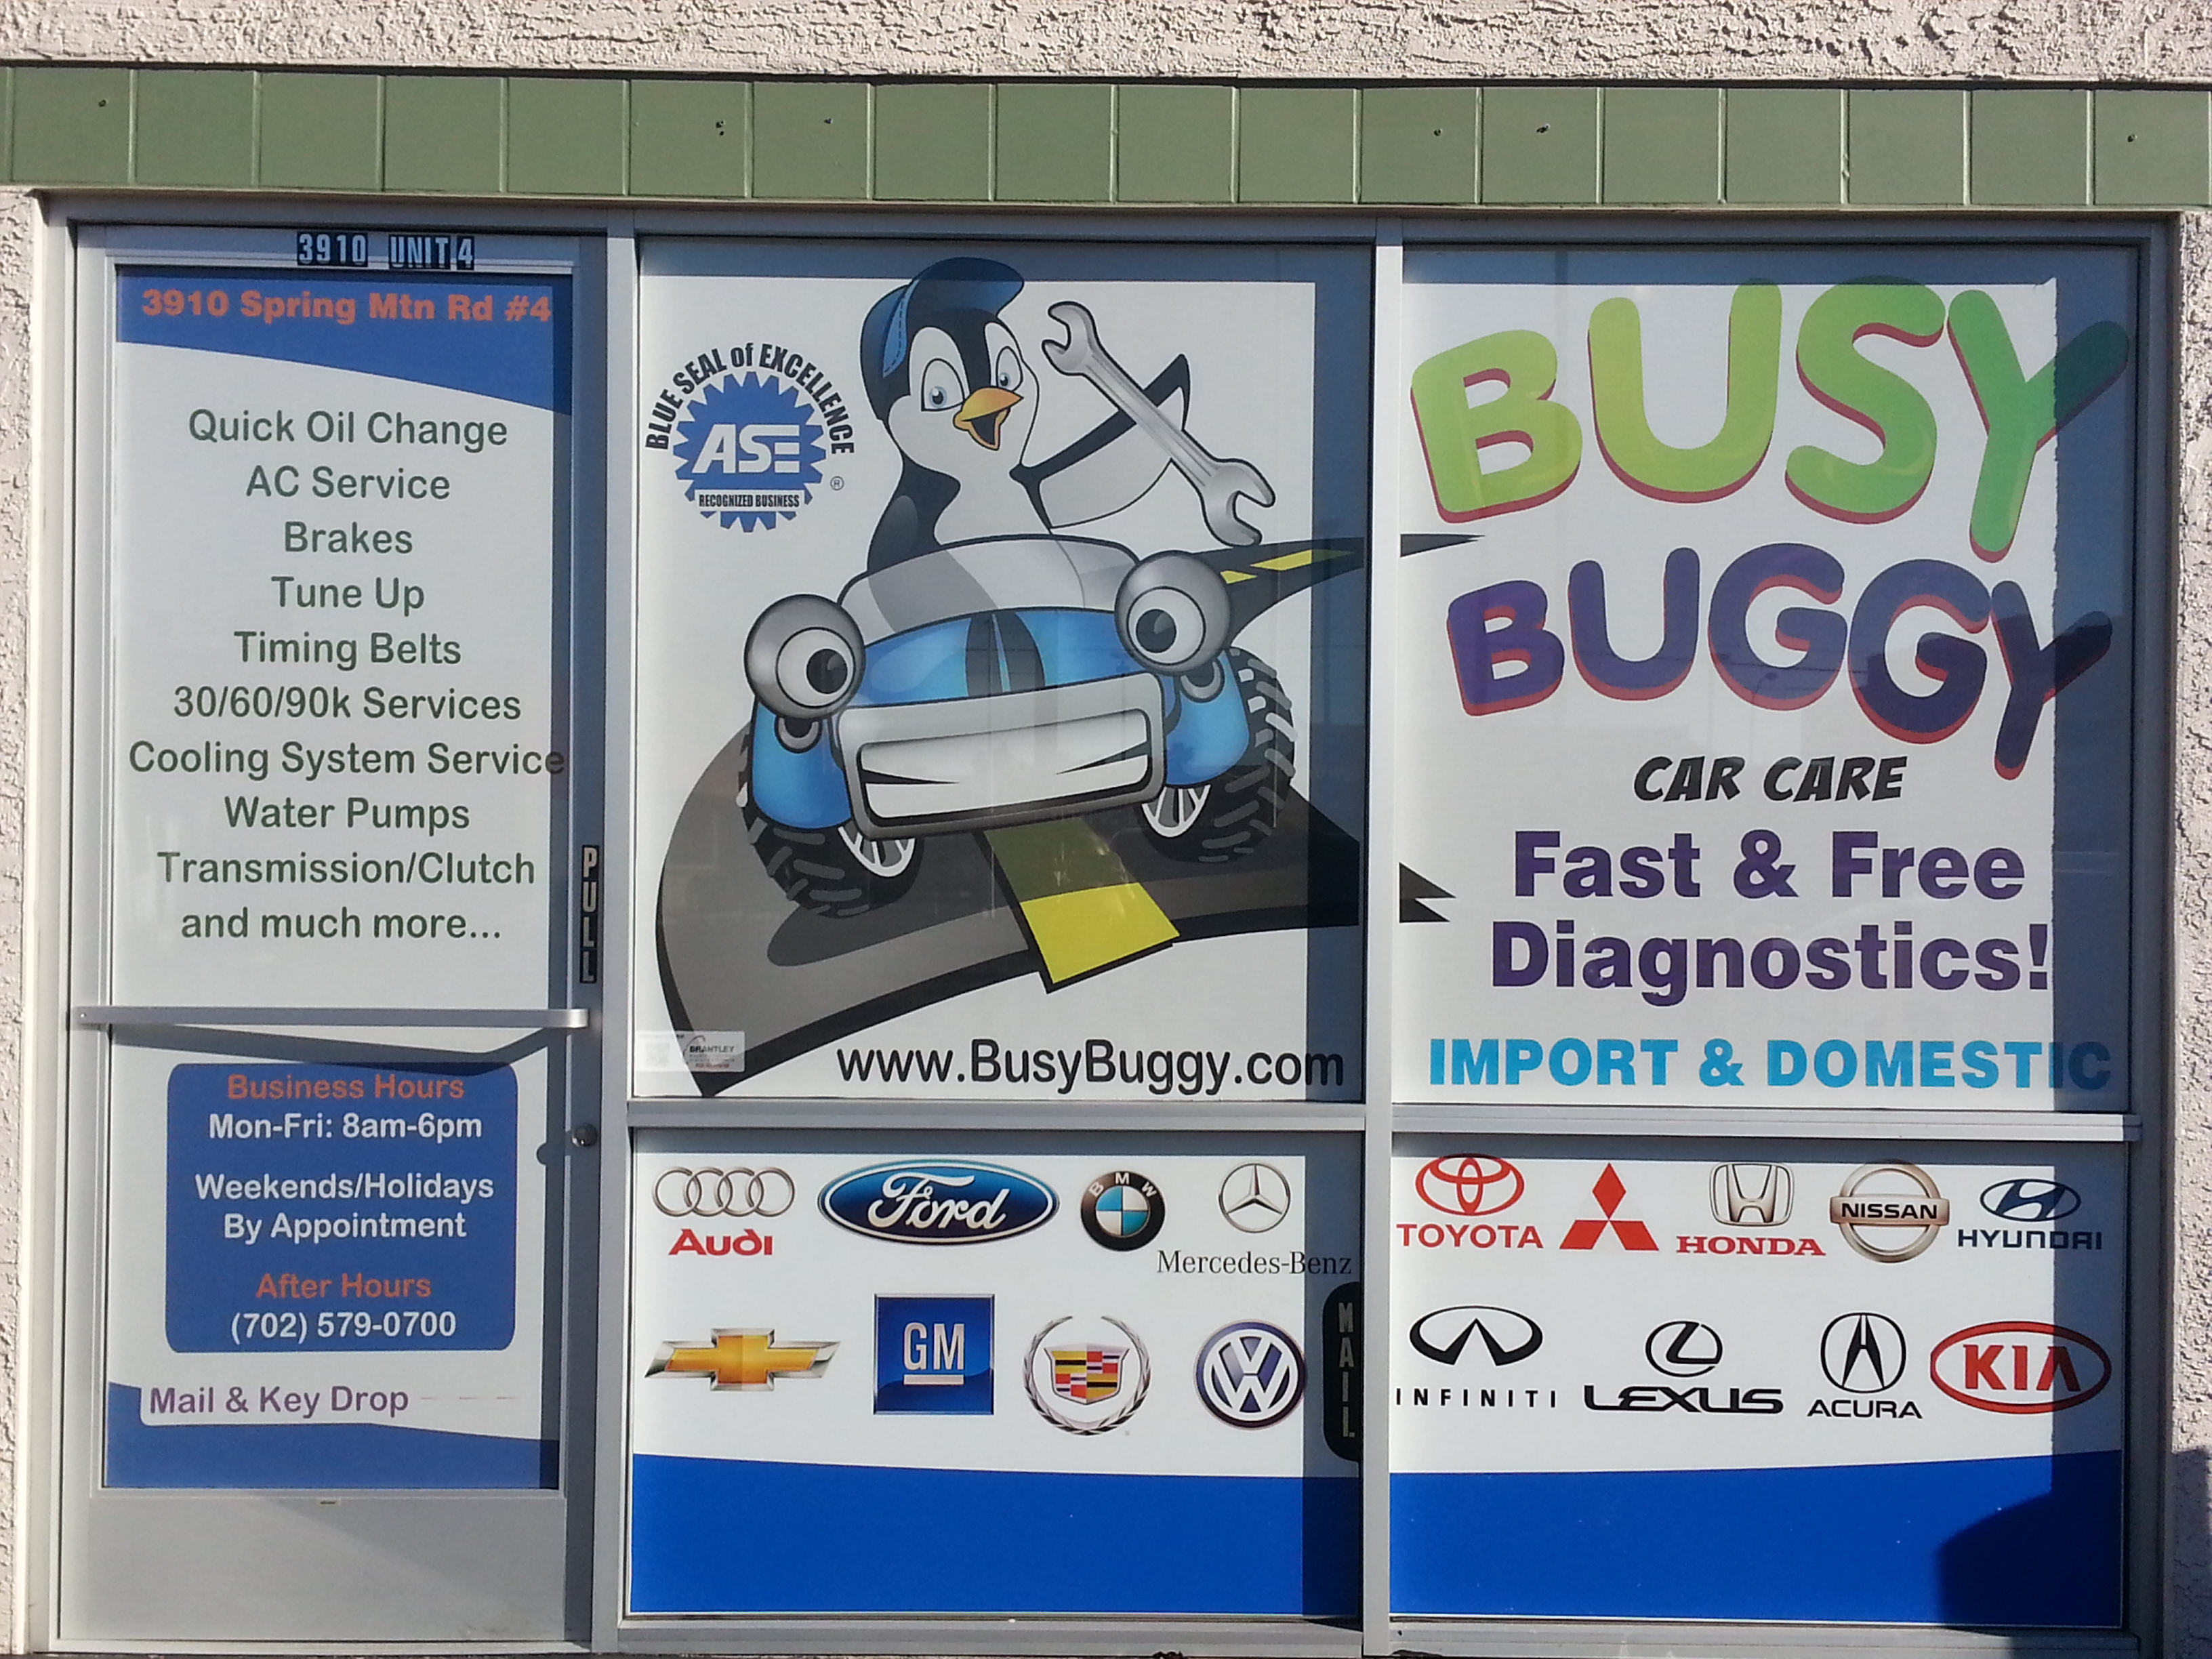 Busy Buggy Car Care